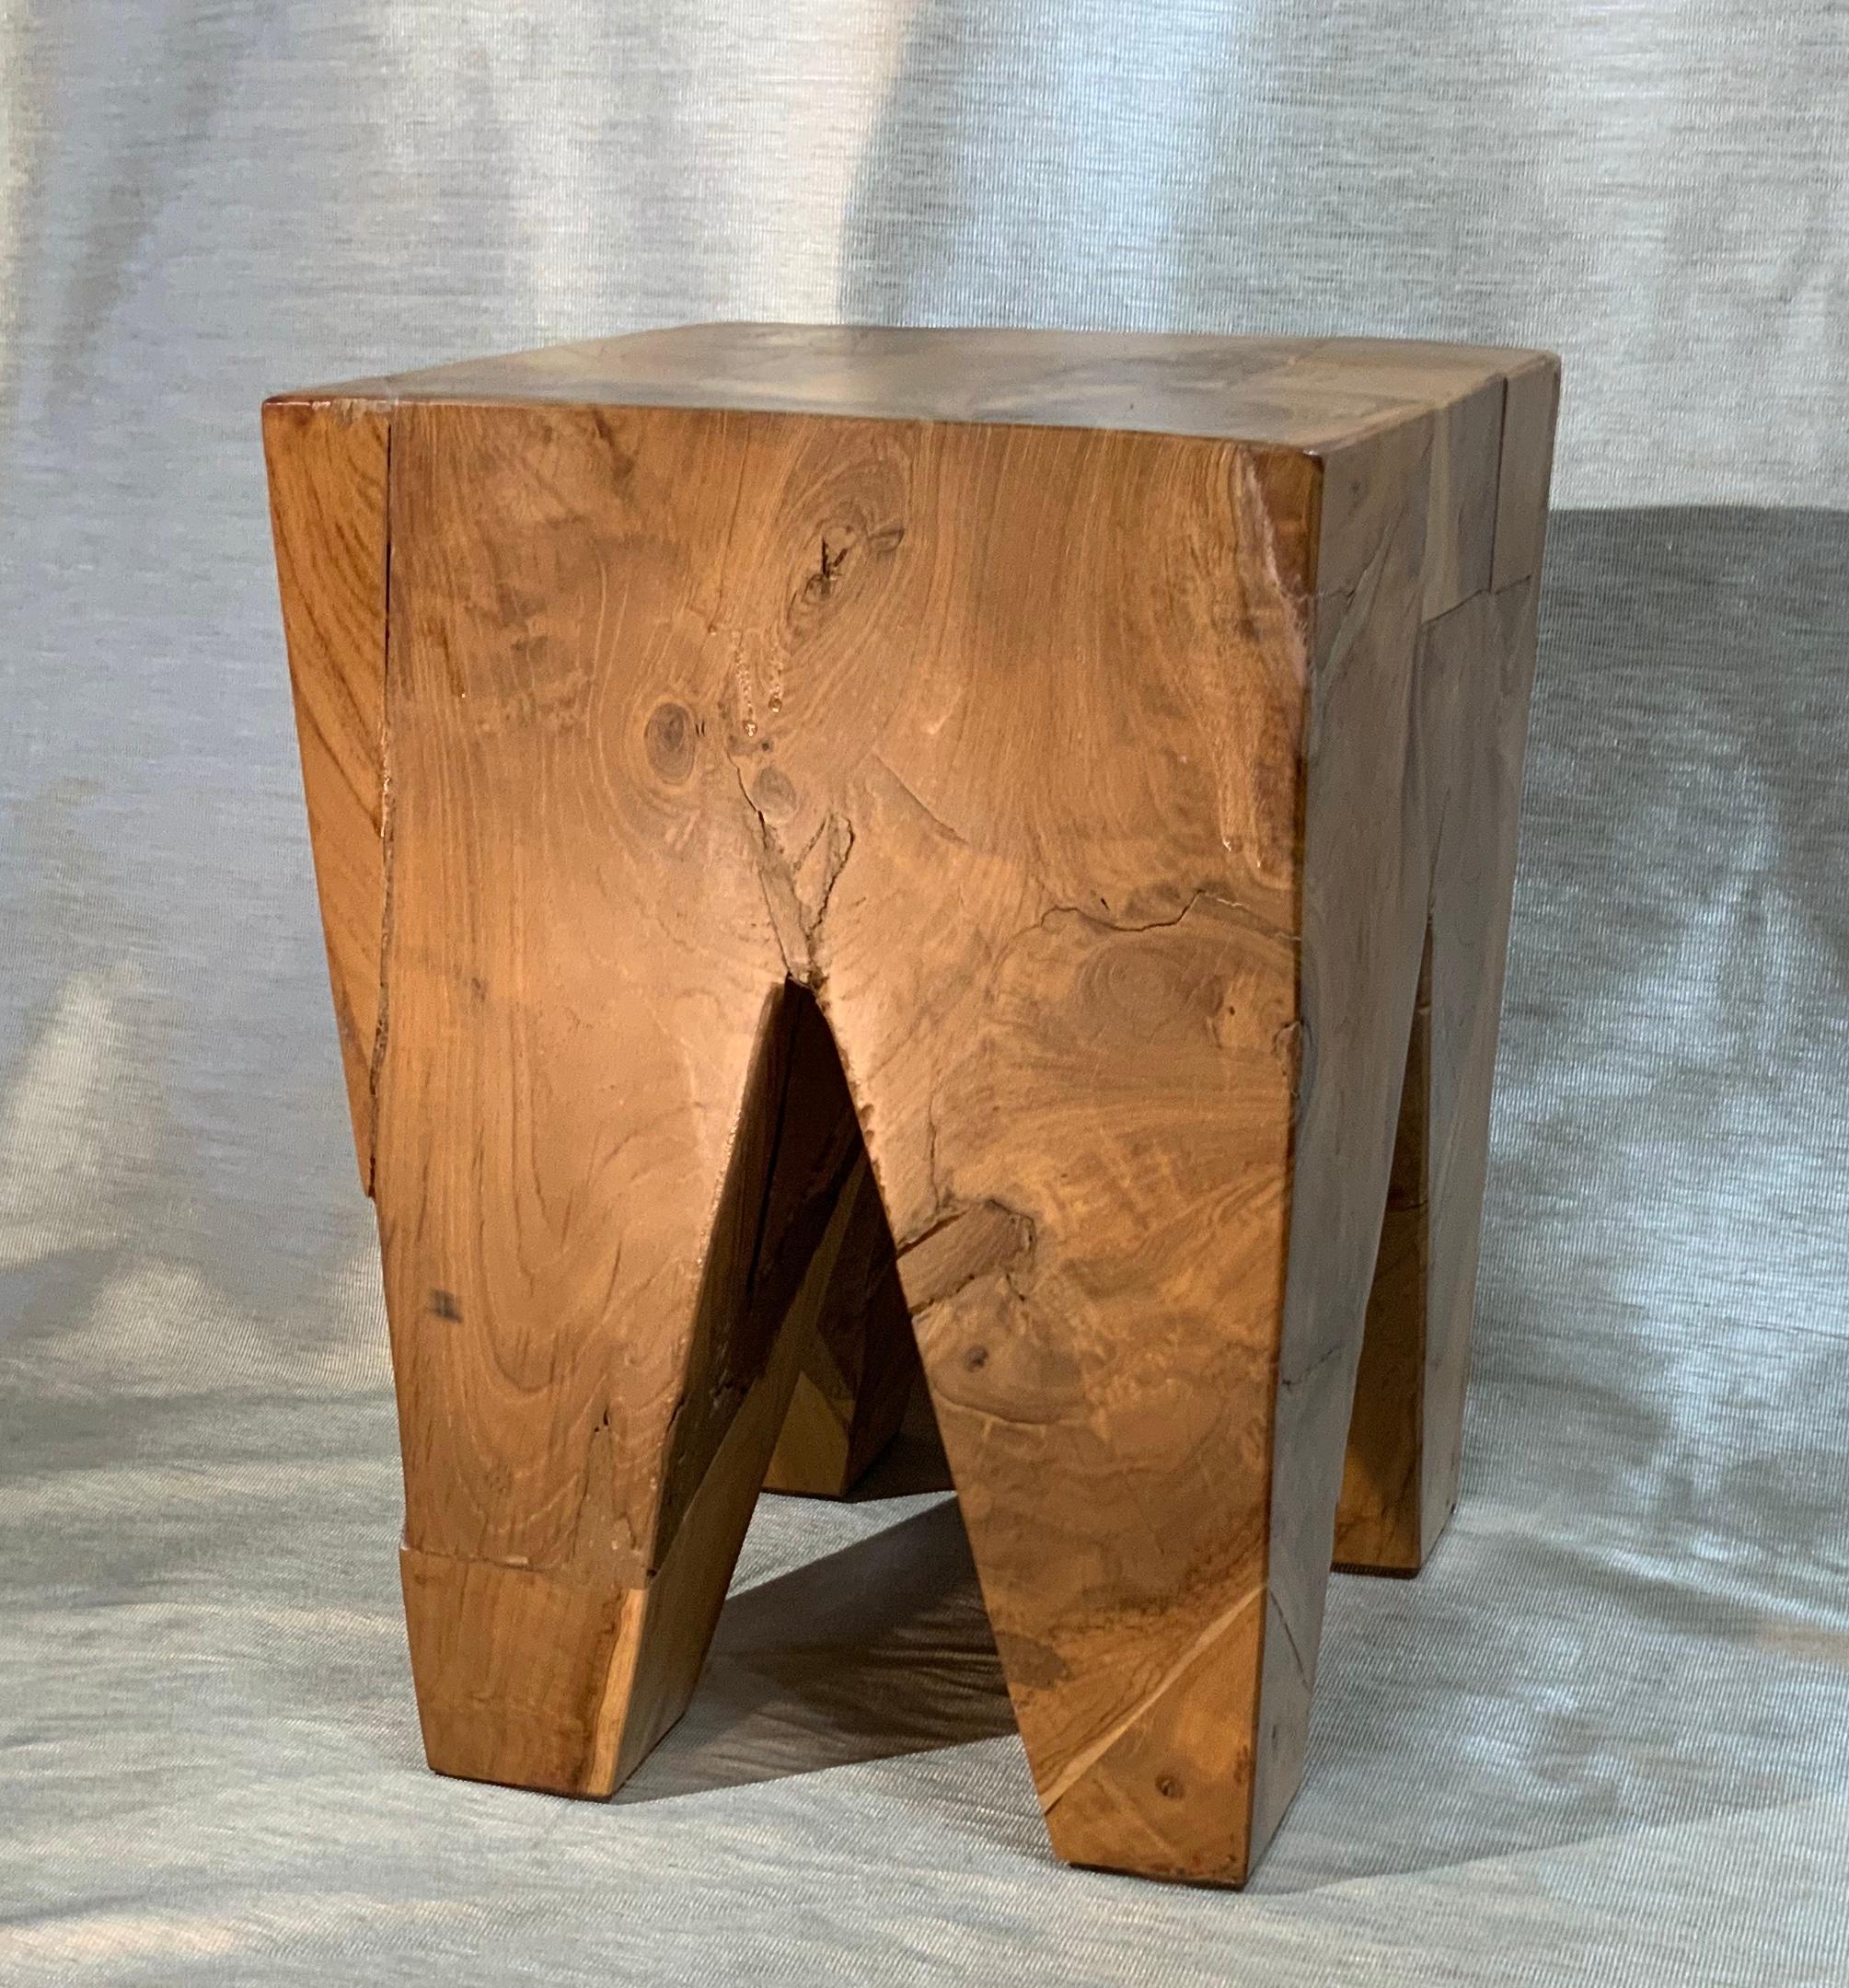 Brazilian Wood Stool or Rustic Side Table